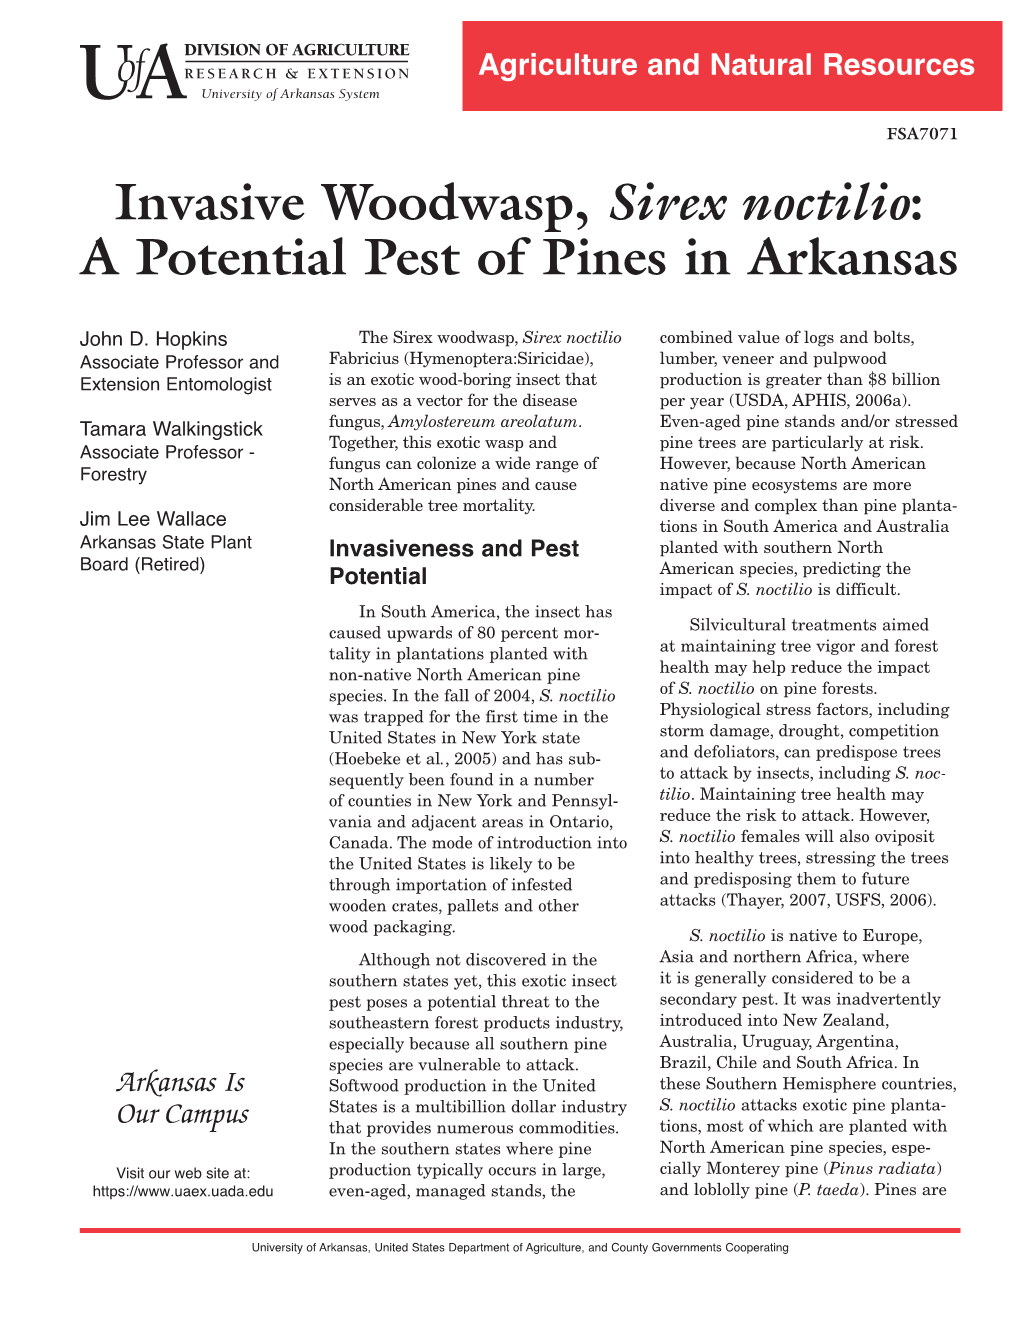 Invasive Woodwasp, Sirex Noctilio: Apotential Pest of Pines in Arkansas